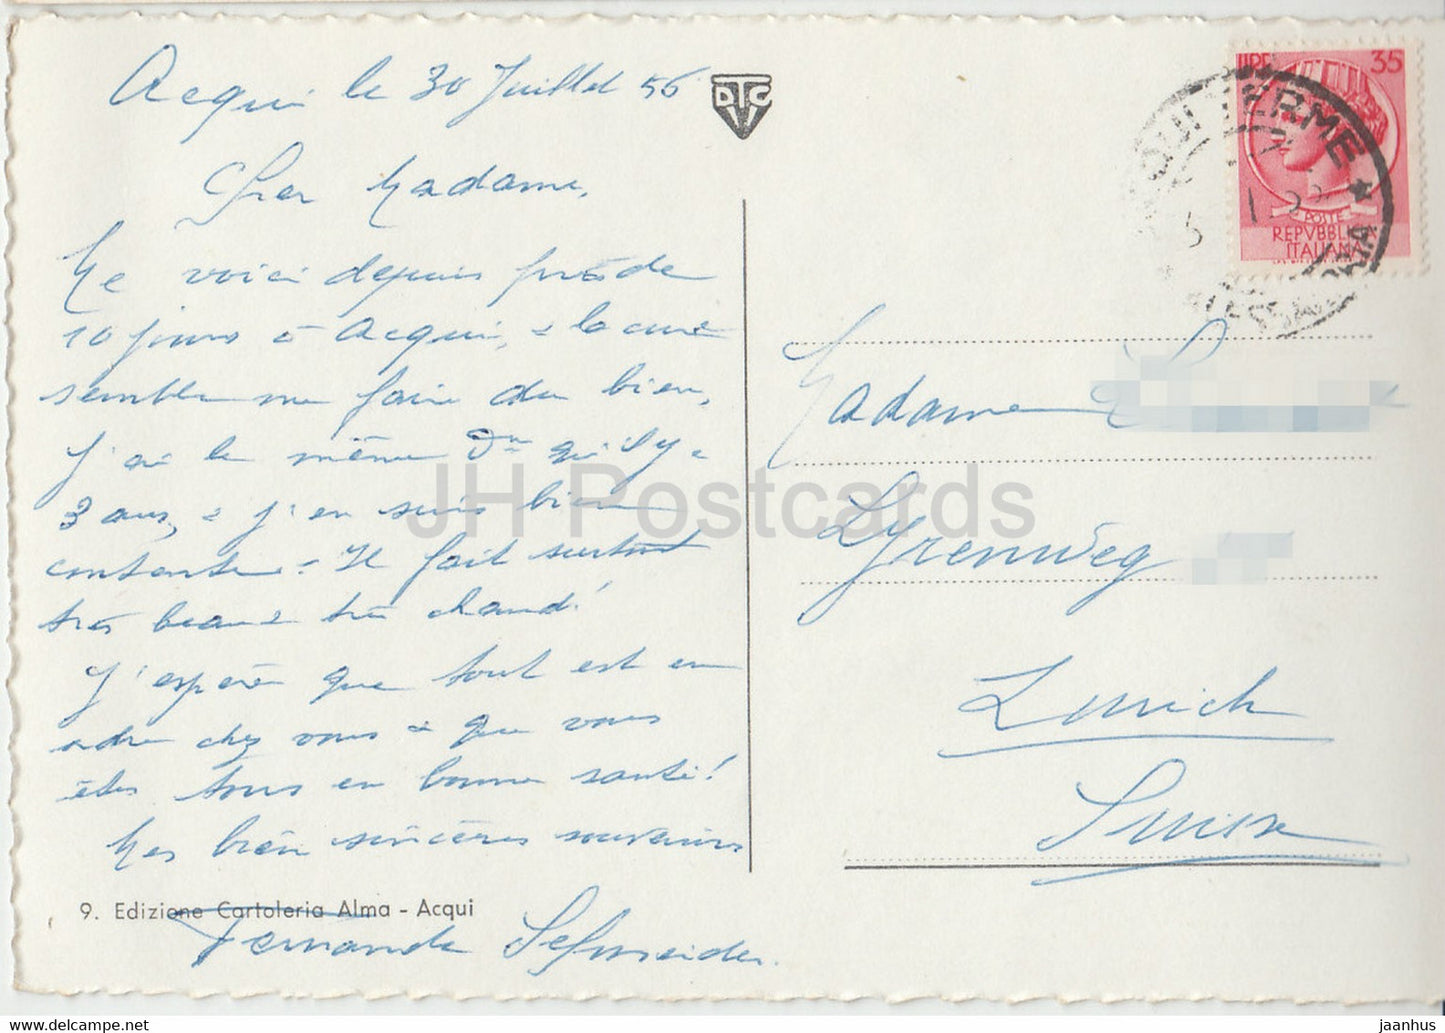 Acqui Terme - Via Giulio Monteverde - old postcard - 1956 - Italy - used